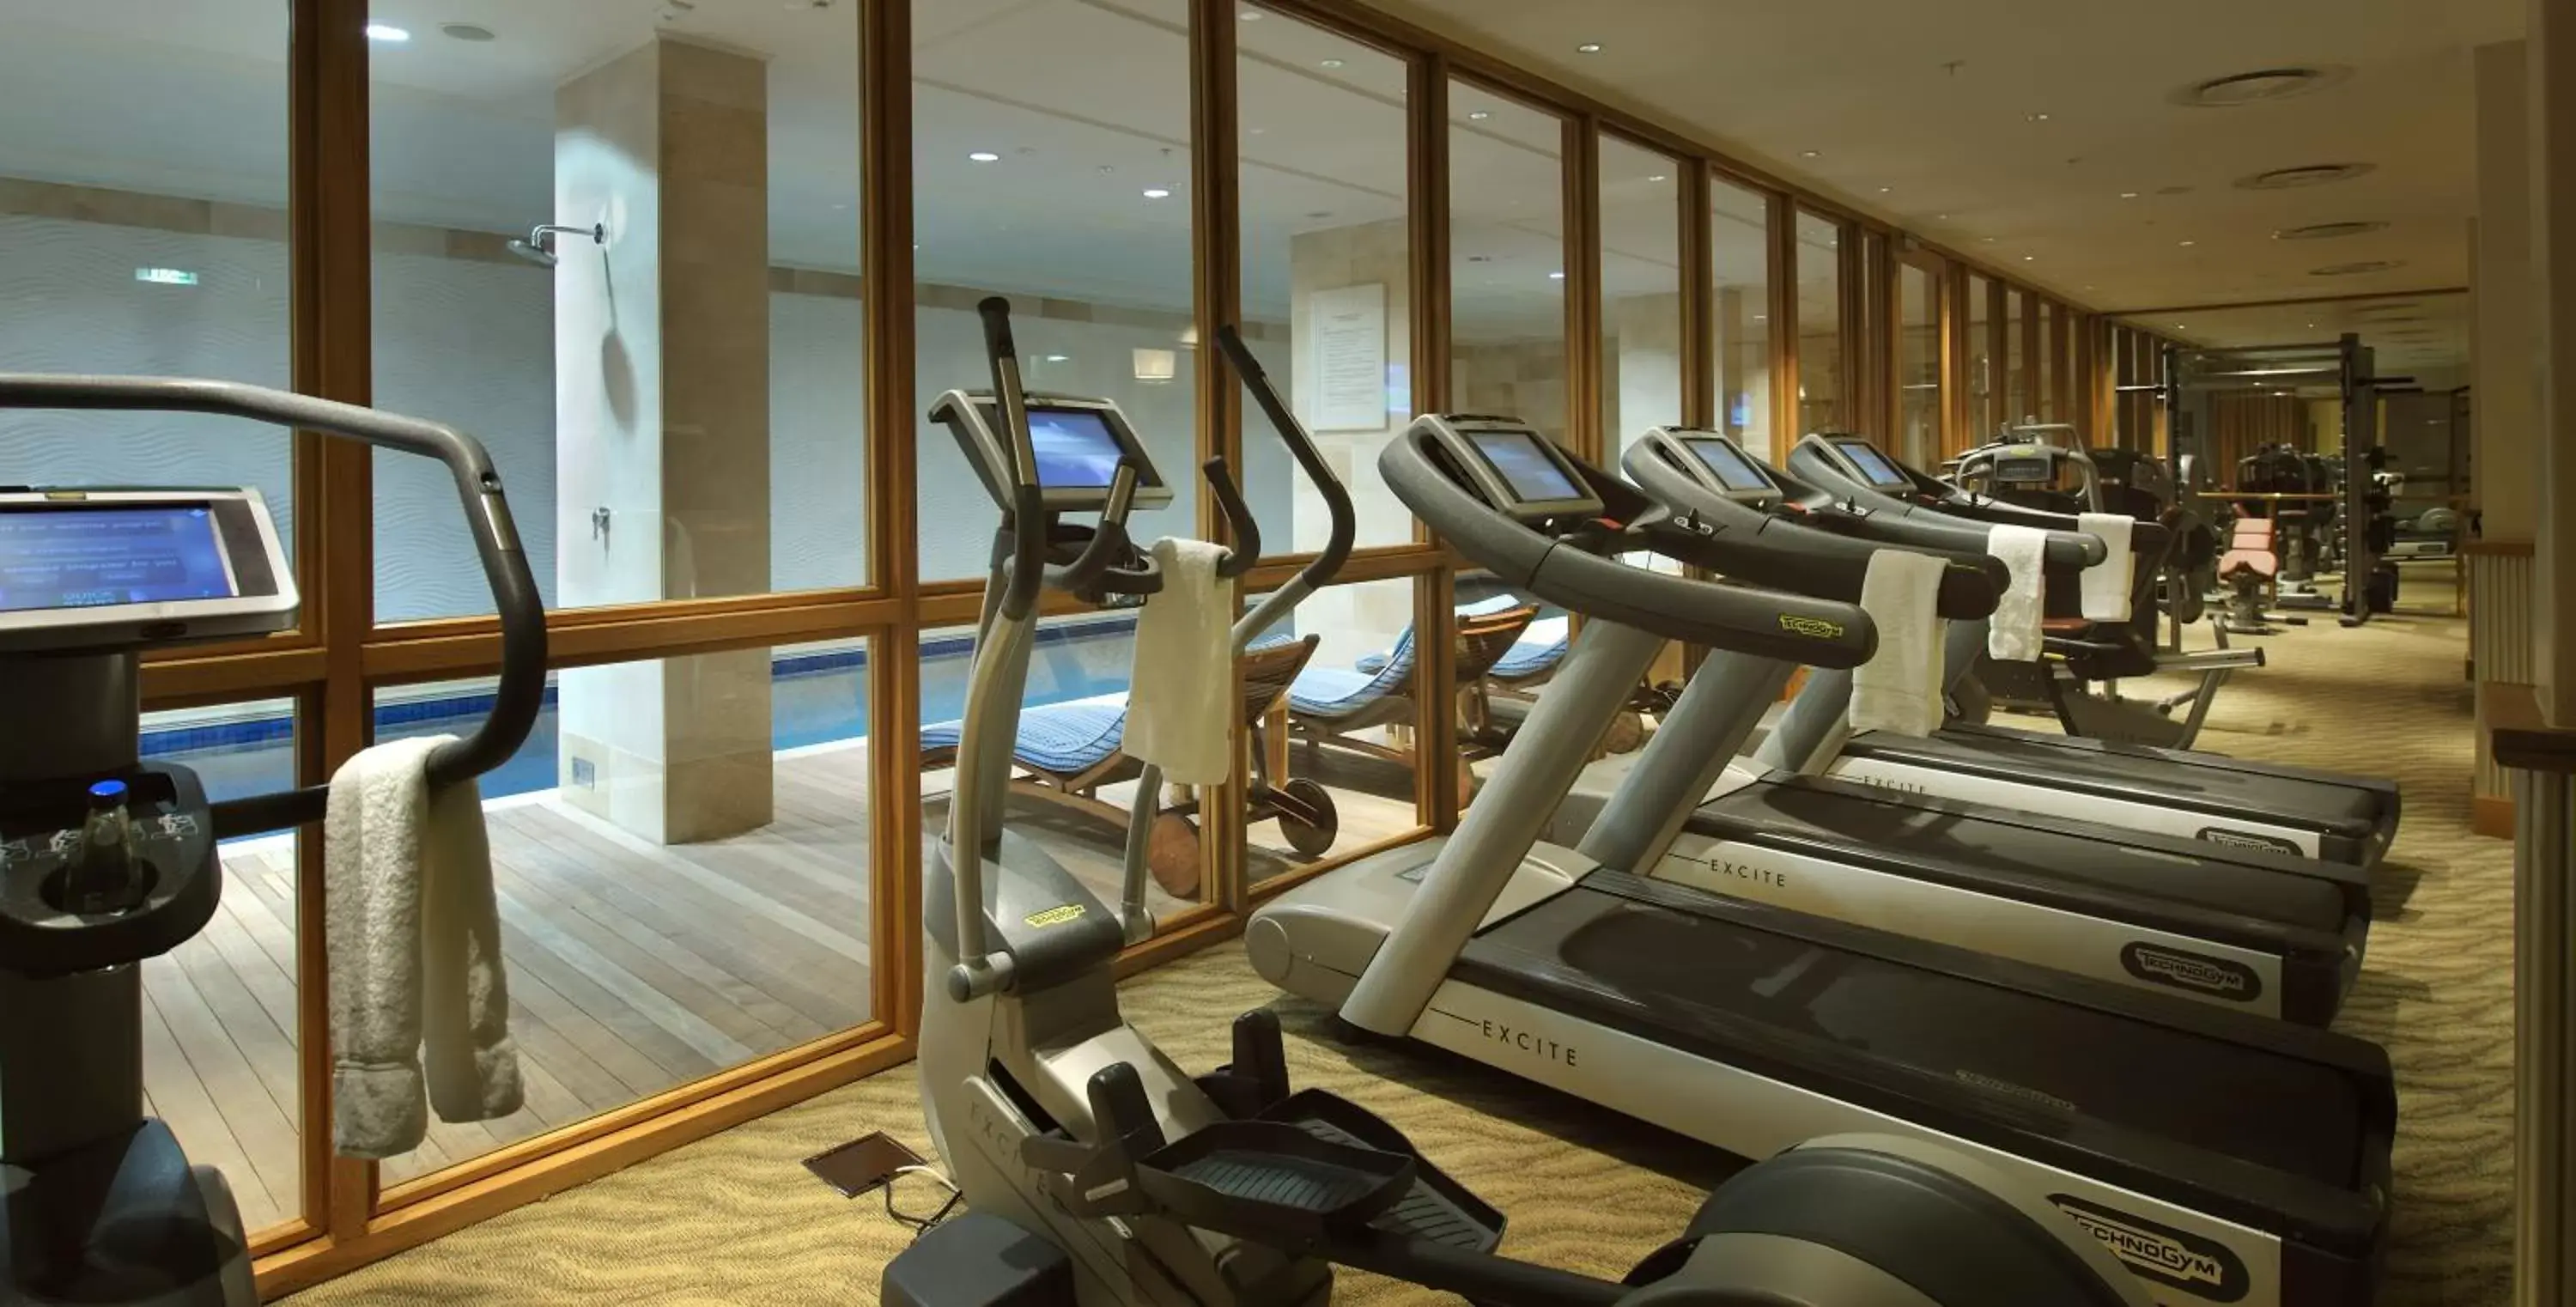 Fitness centre/facilities, Fitness Center/Facilities in Taj Cape Town